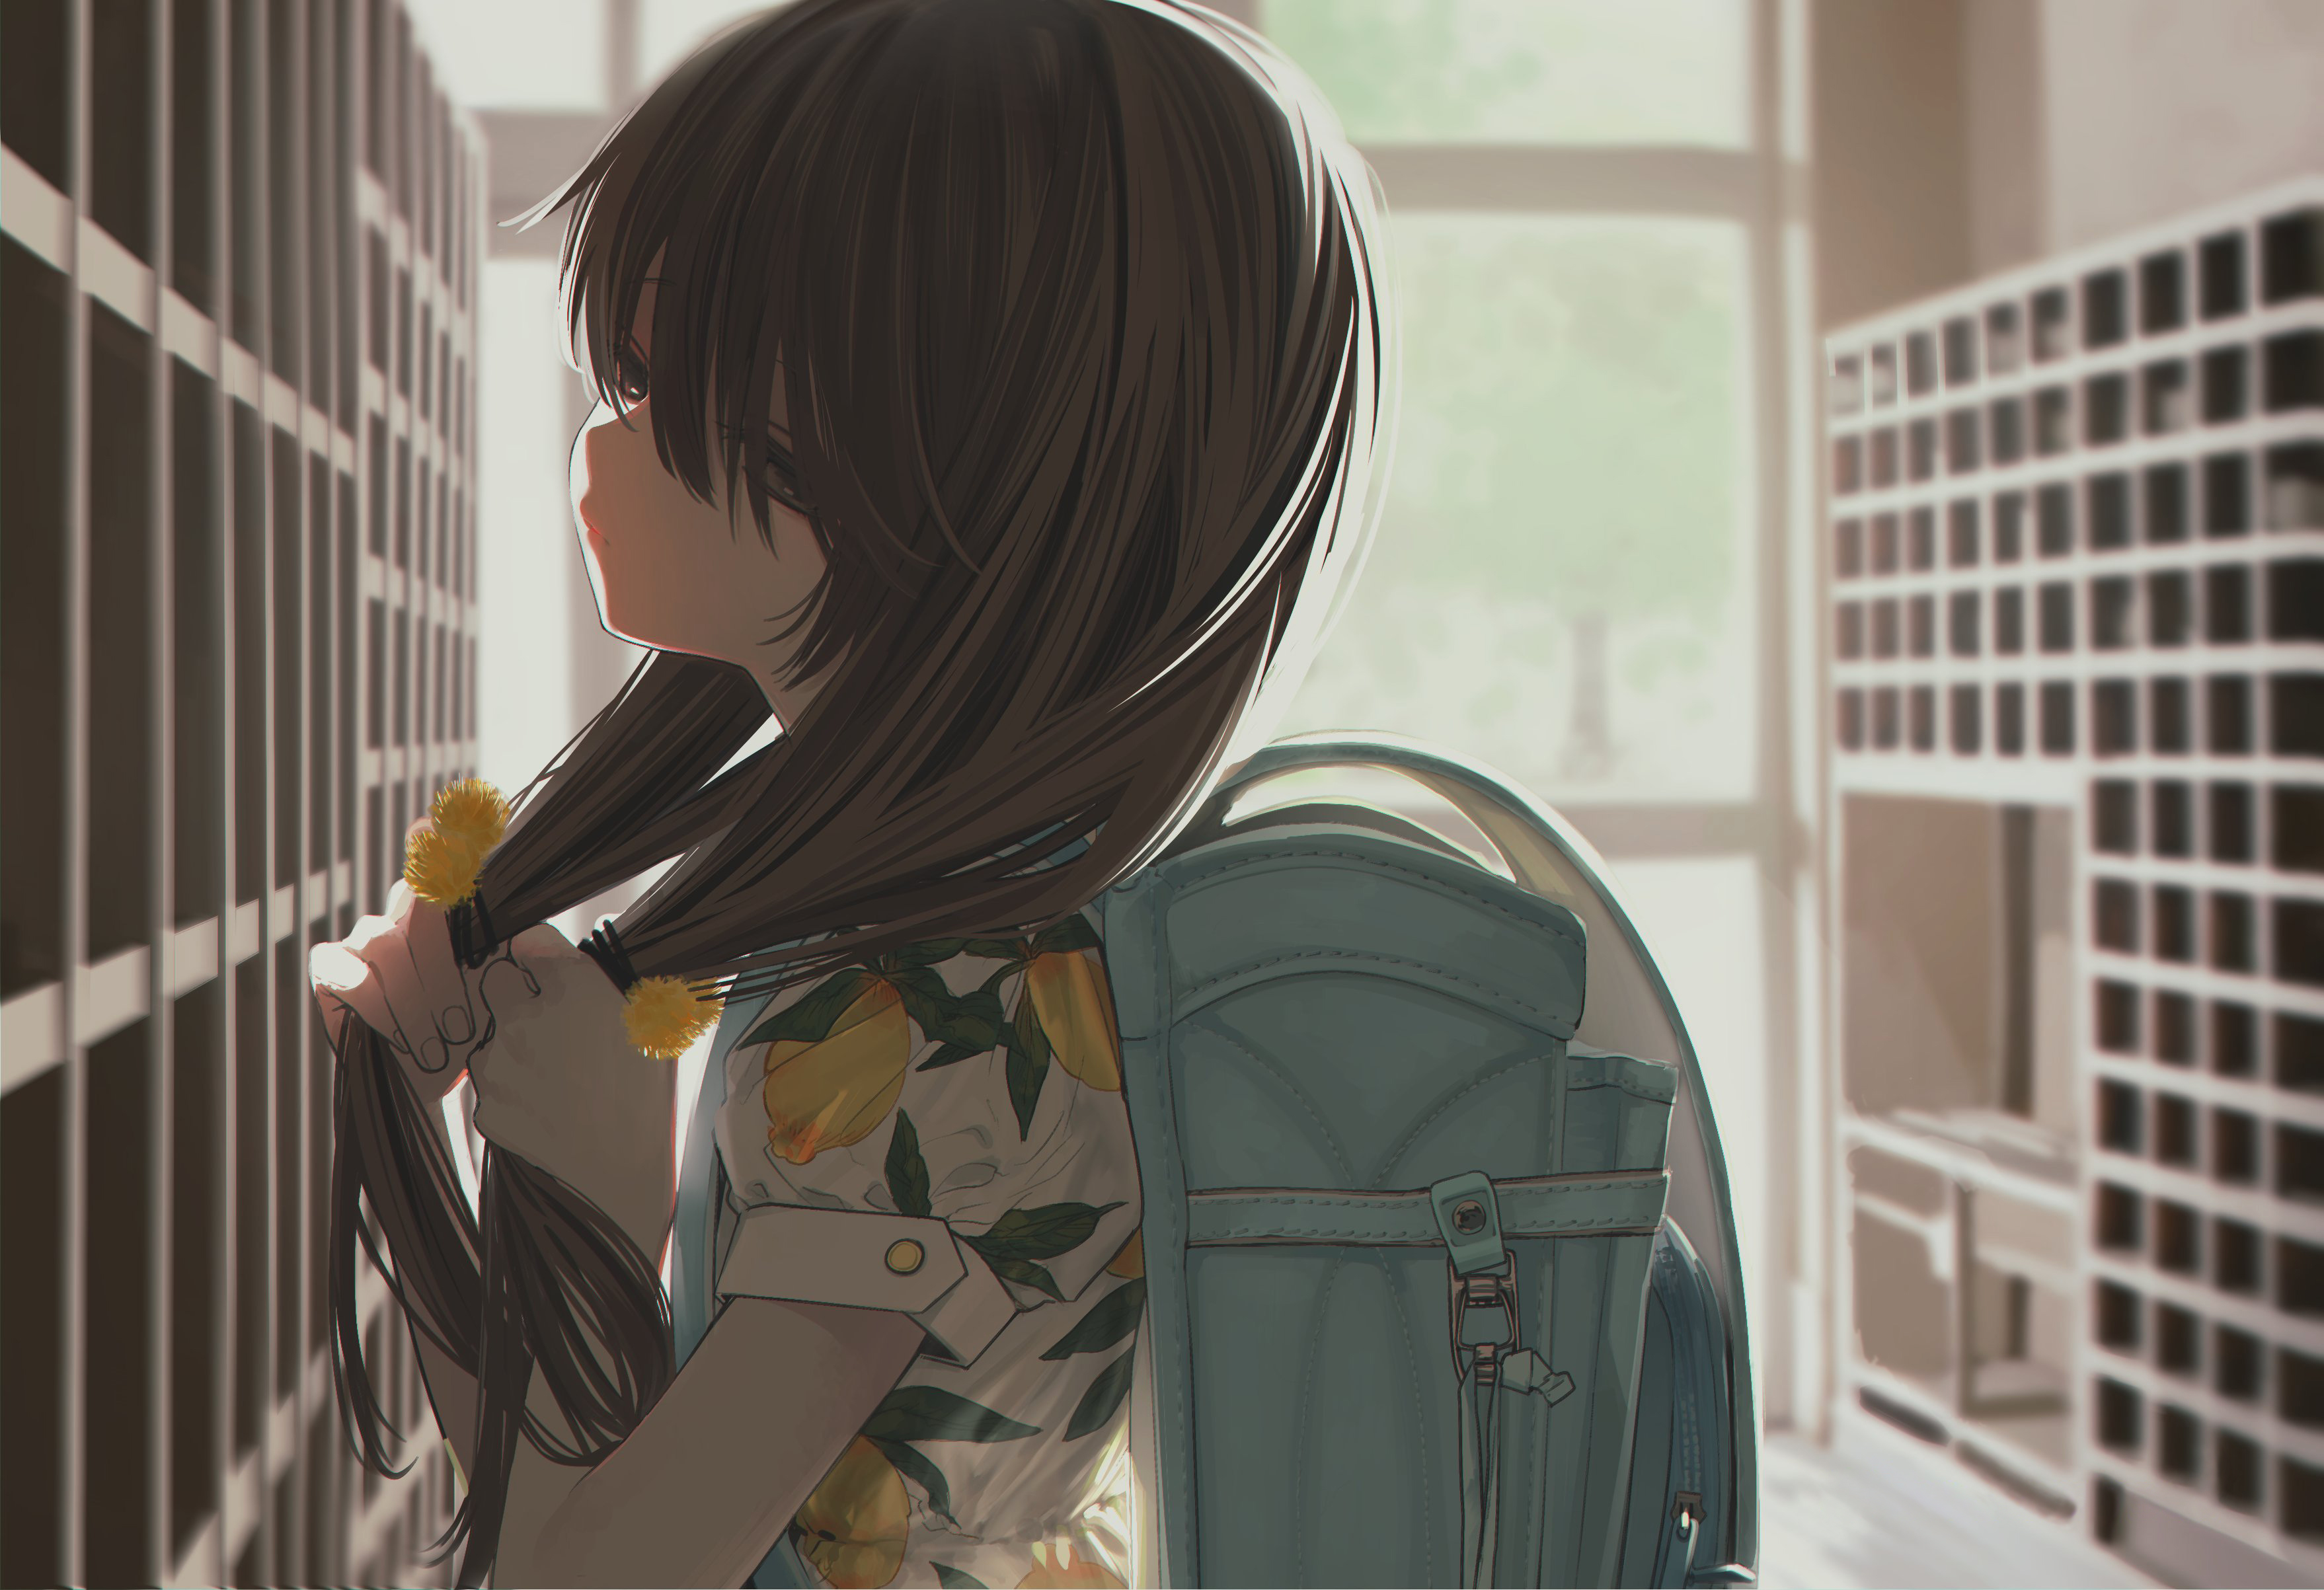 Anime Anime Girls Brunette Long Hair Dark Eyes Backpacks School Scrunchy Looking Away 3516x2406